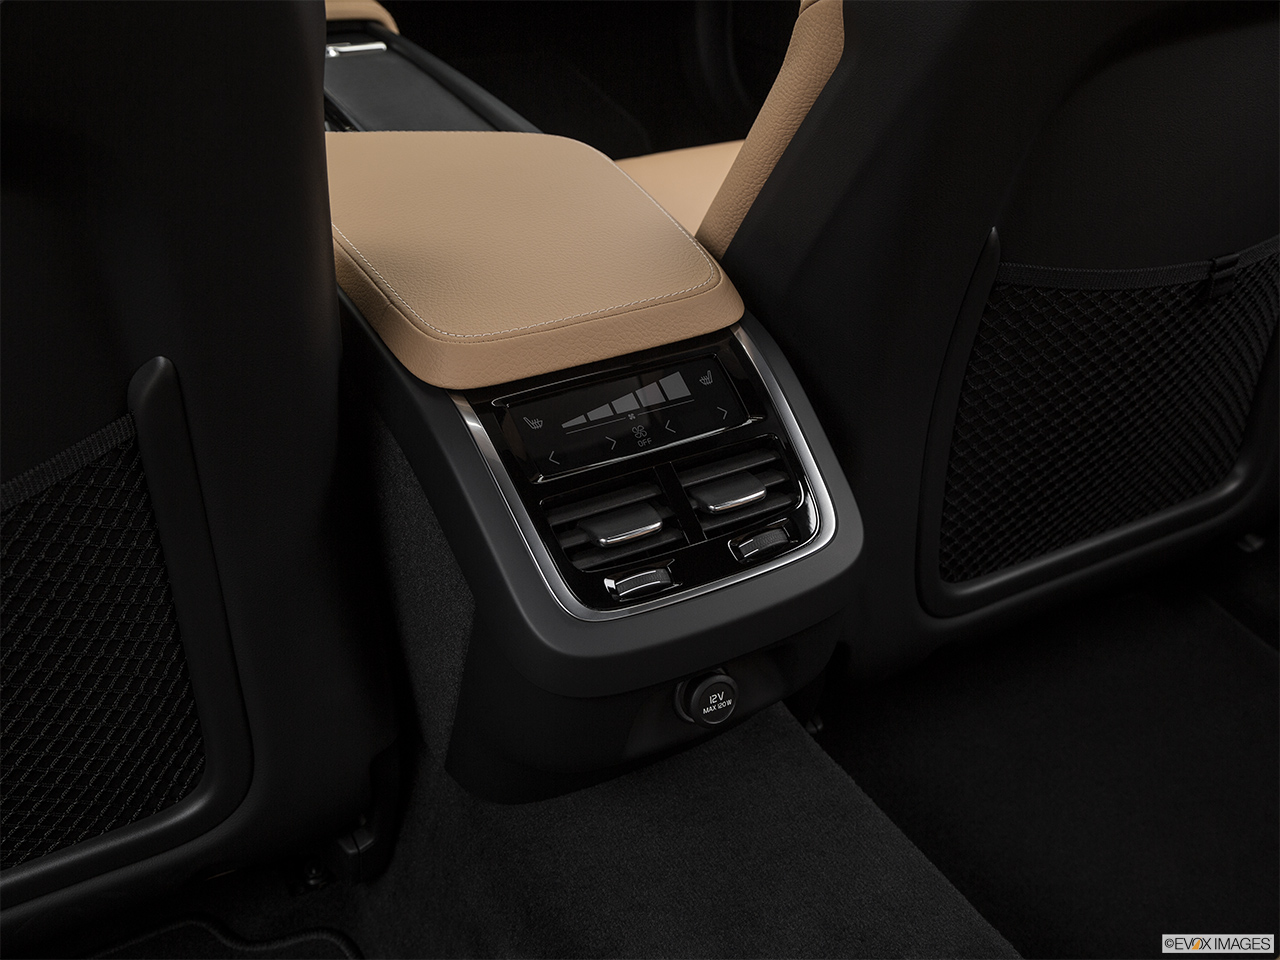 2017 Volvo S90 T6 Momentum Rear A/C controls. 